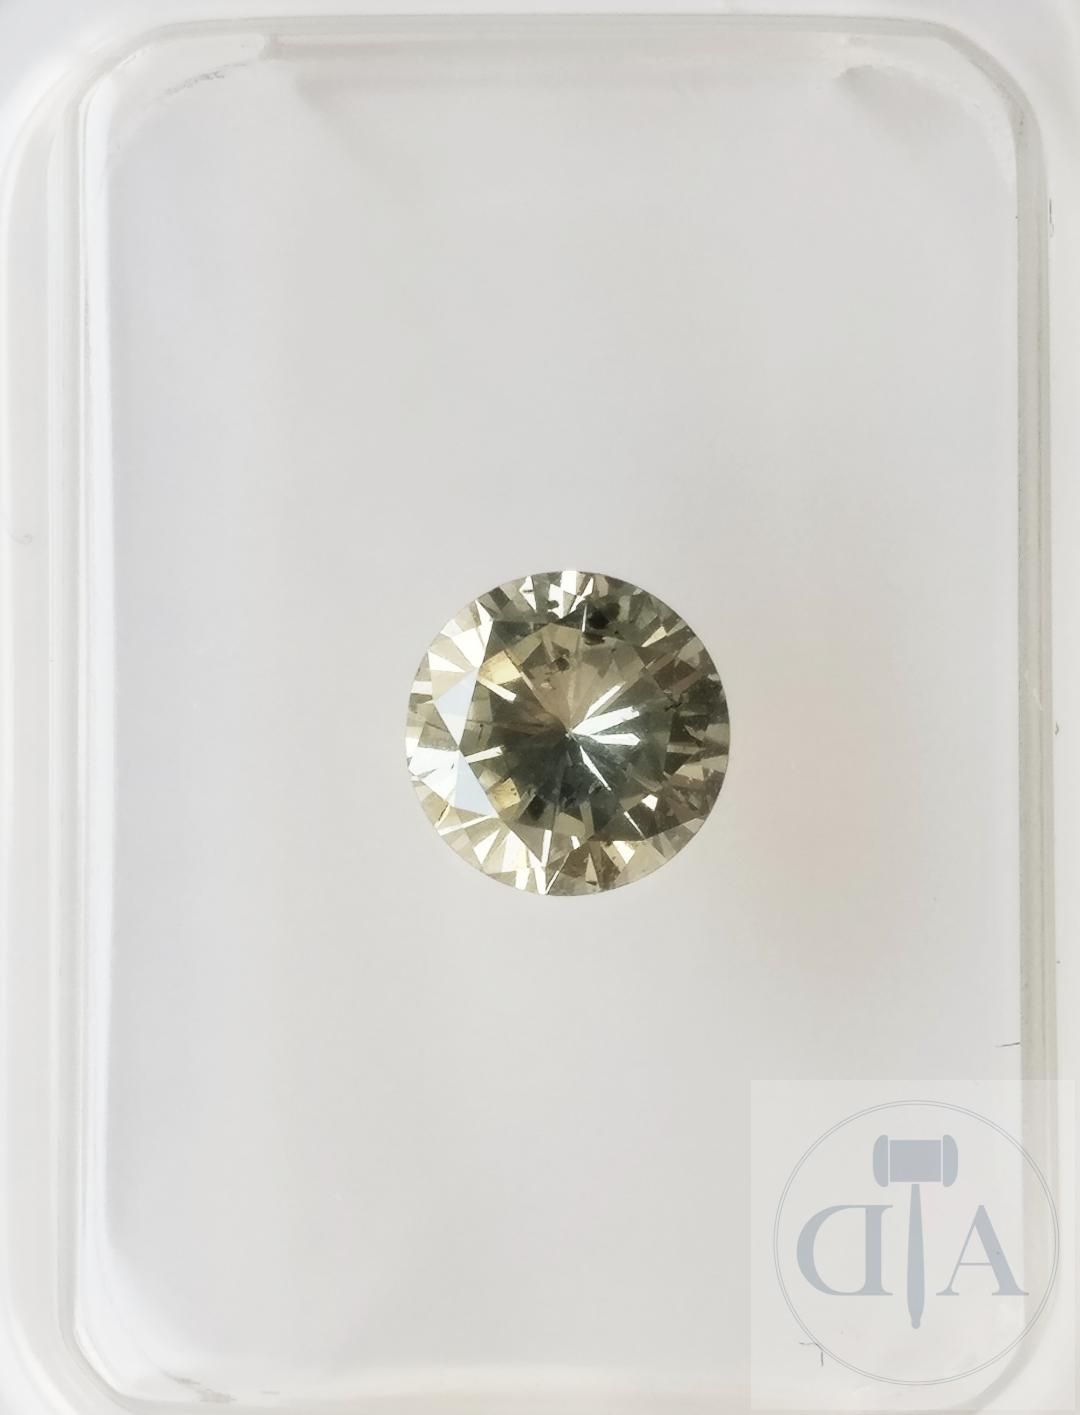 Null "Diamant 0,59ct certifié GRA - Certificat GRA n° 1810019131AN 
- Forme : Br&hellip;